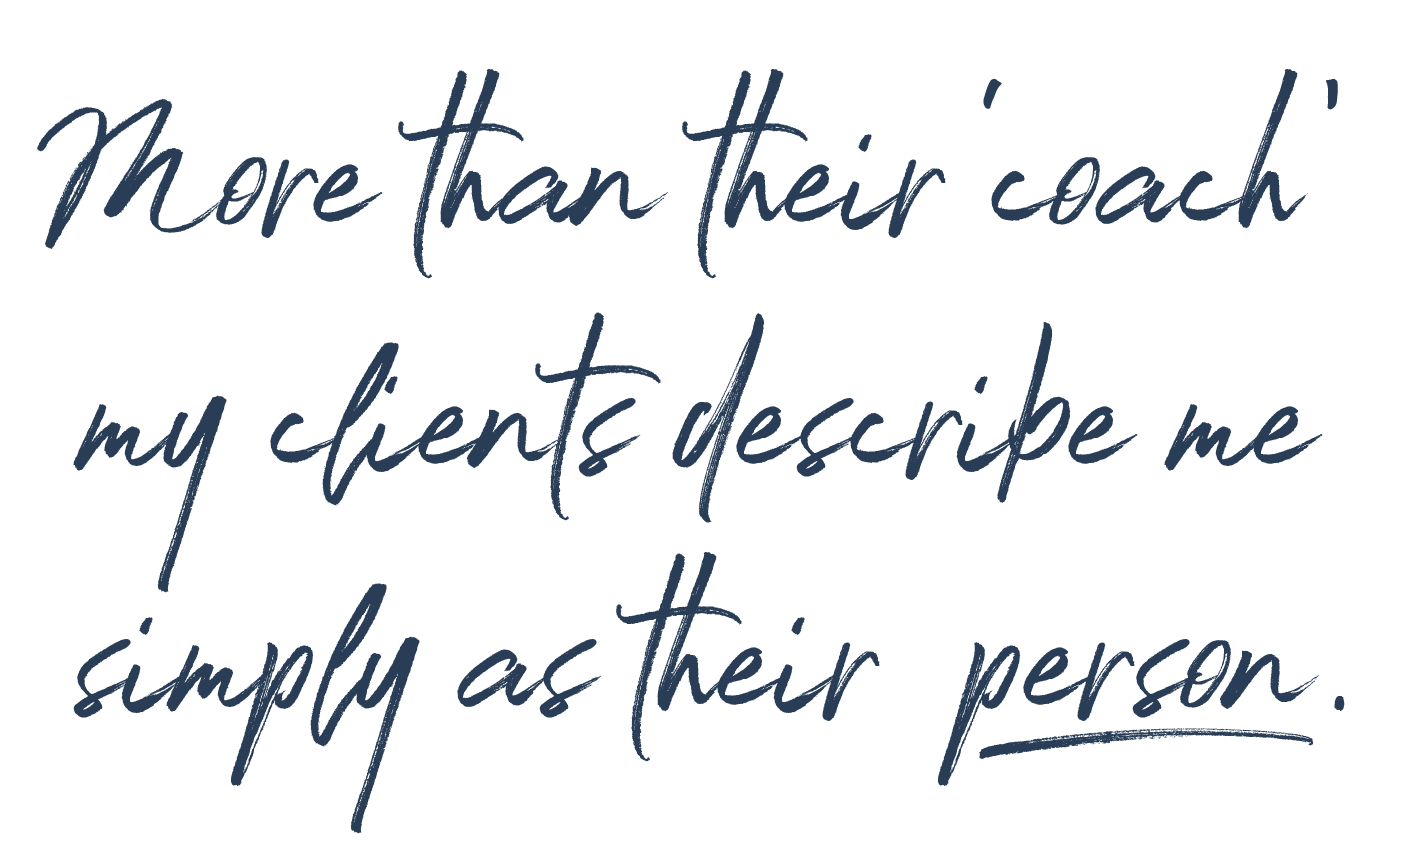 More than their ‘coach’ my clients describe me simply as their ‘person.’